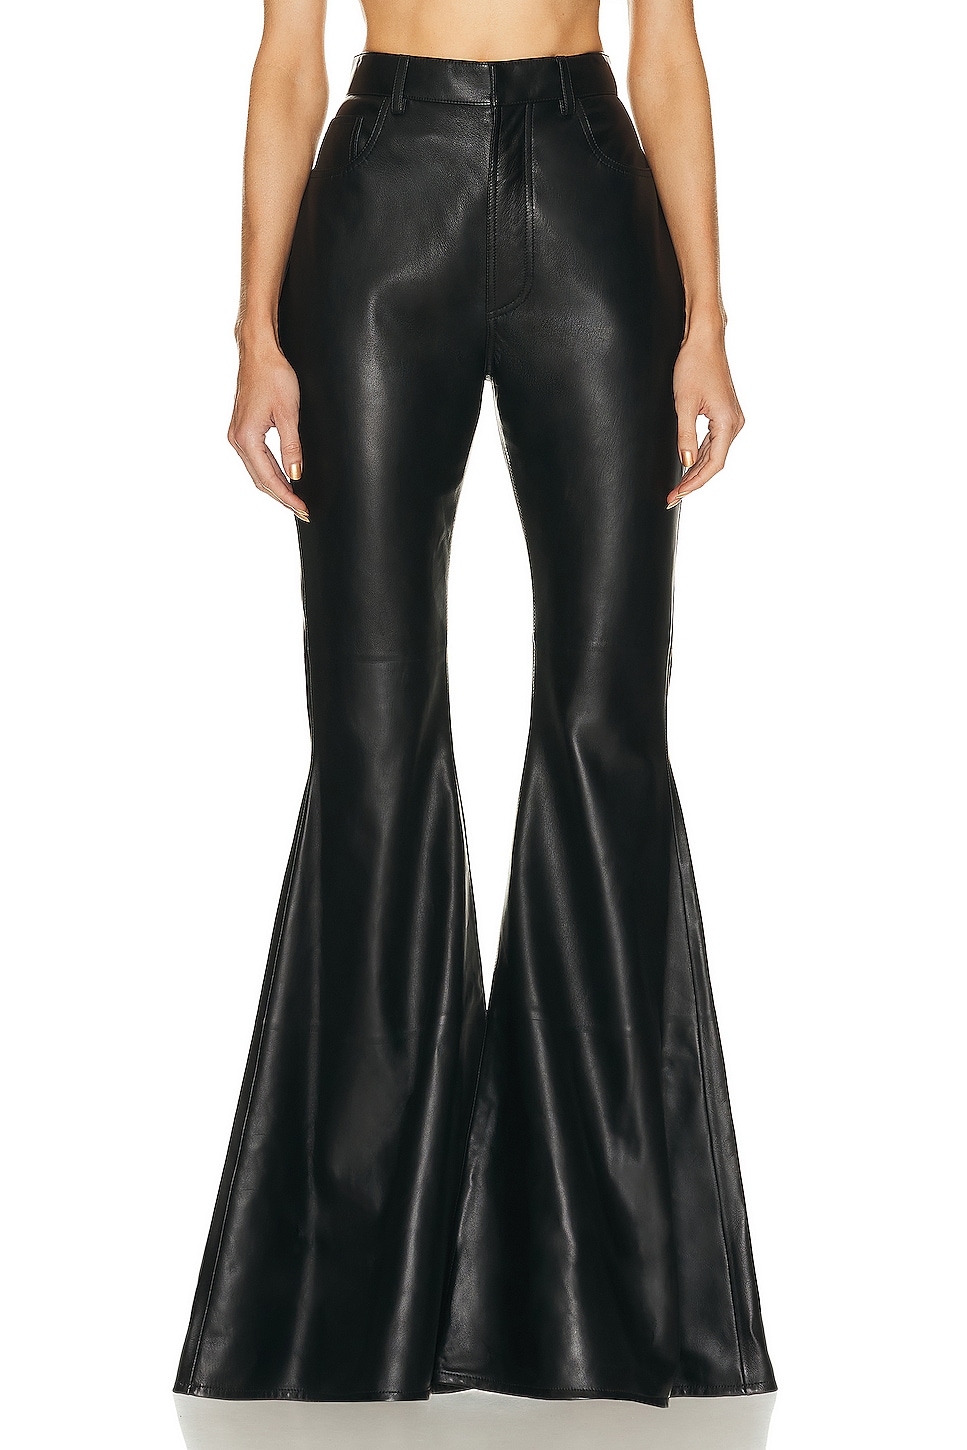 Image 1 of ALAÏA Leather Flare Pant in Noir Alaia